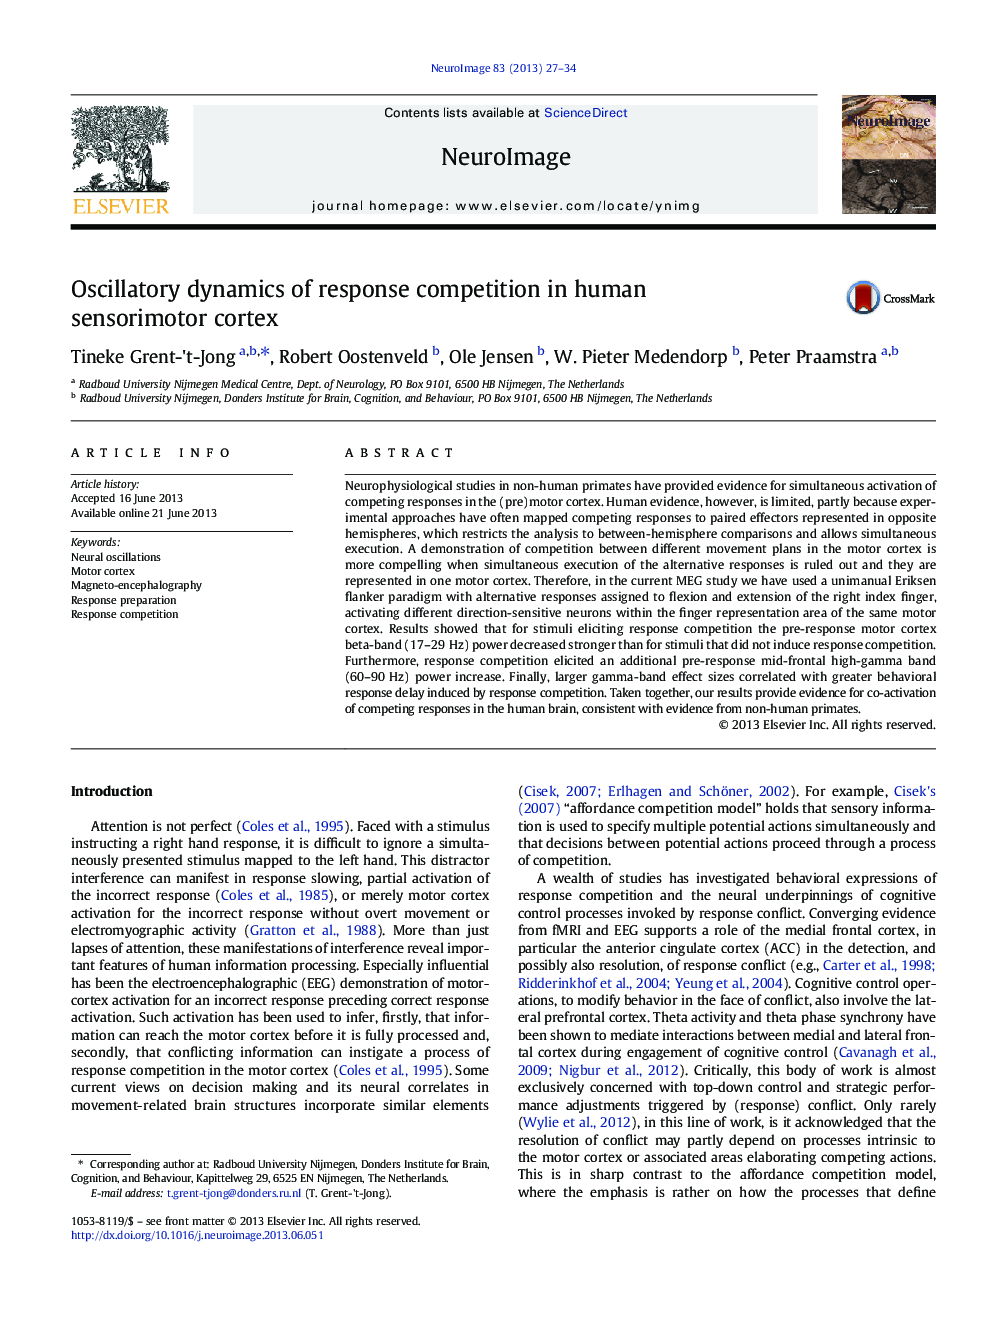 Oscillatory dynamics of response competition in human sensorimotor cortex